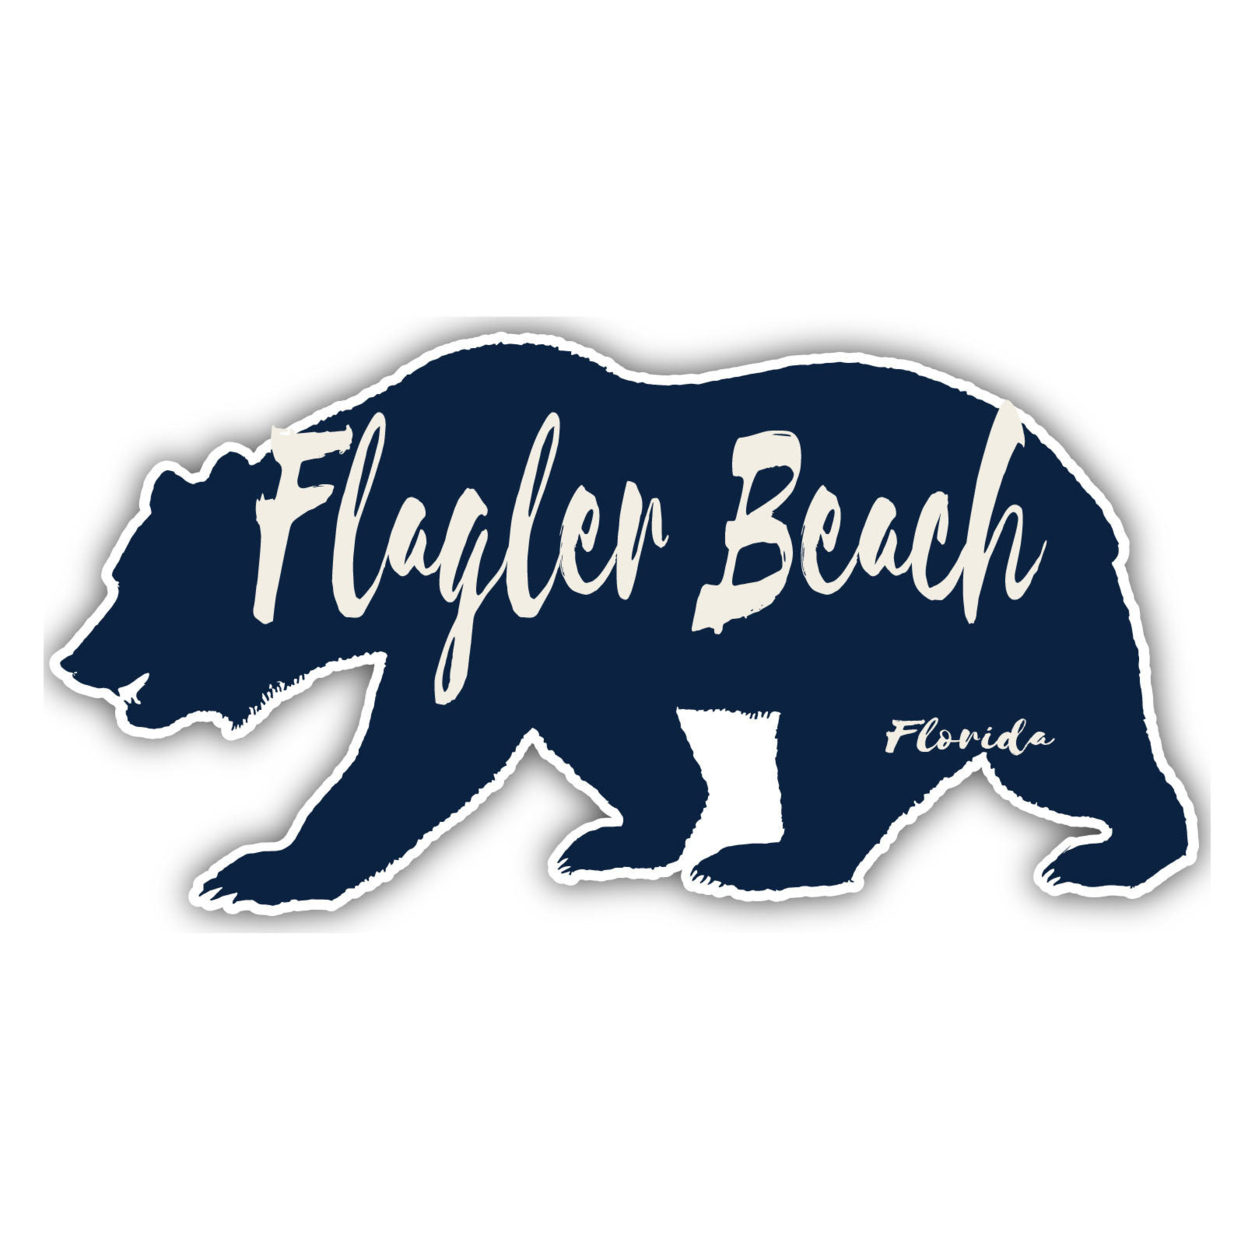 Flagler Beach Florida Souvenir Decorative Stickers (Choose Theme And Size) - Single Unit, 2-Inch, Tent